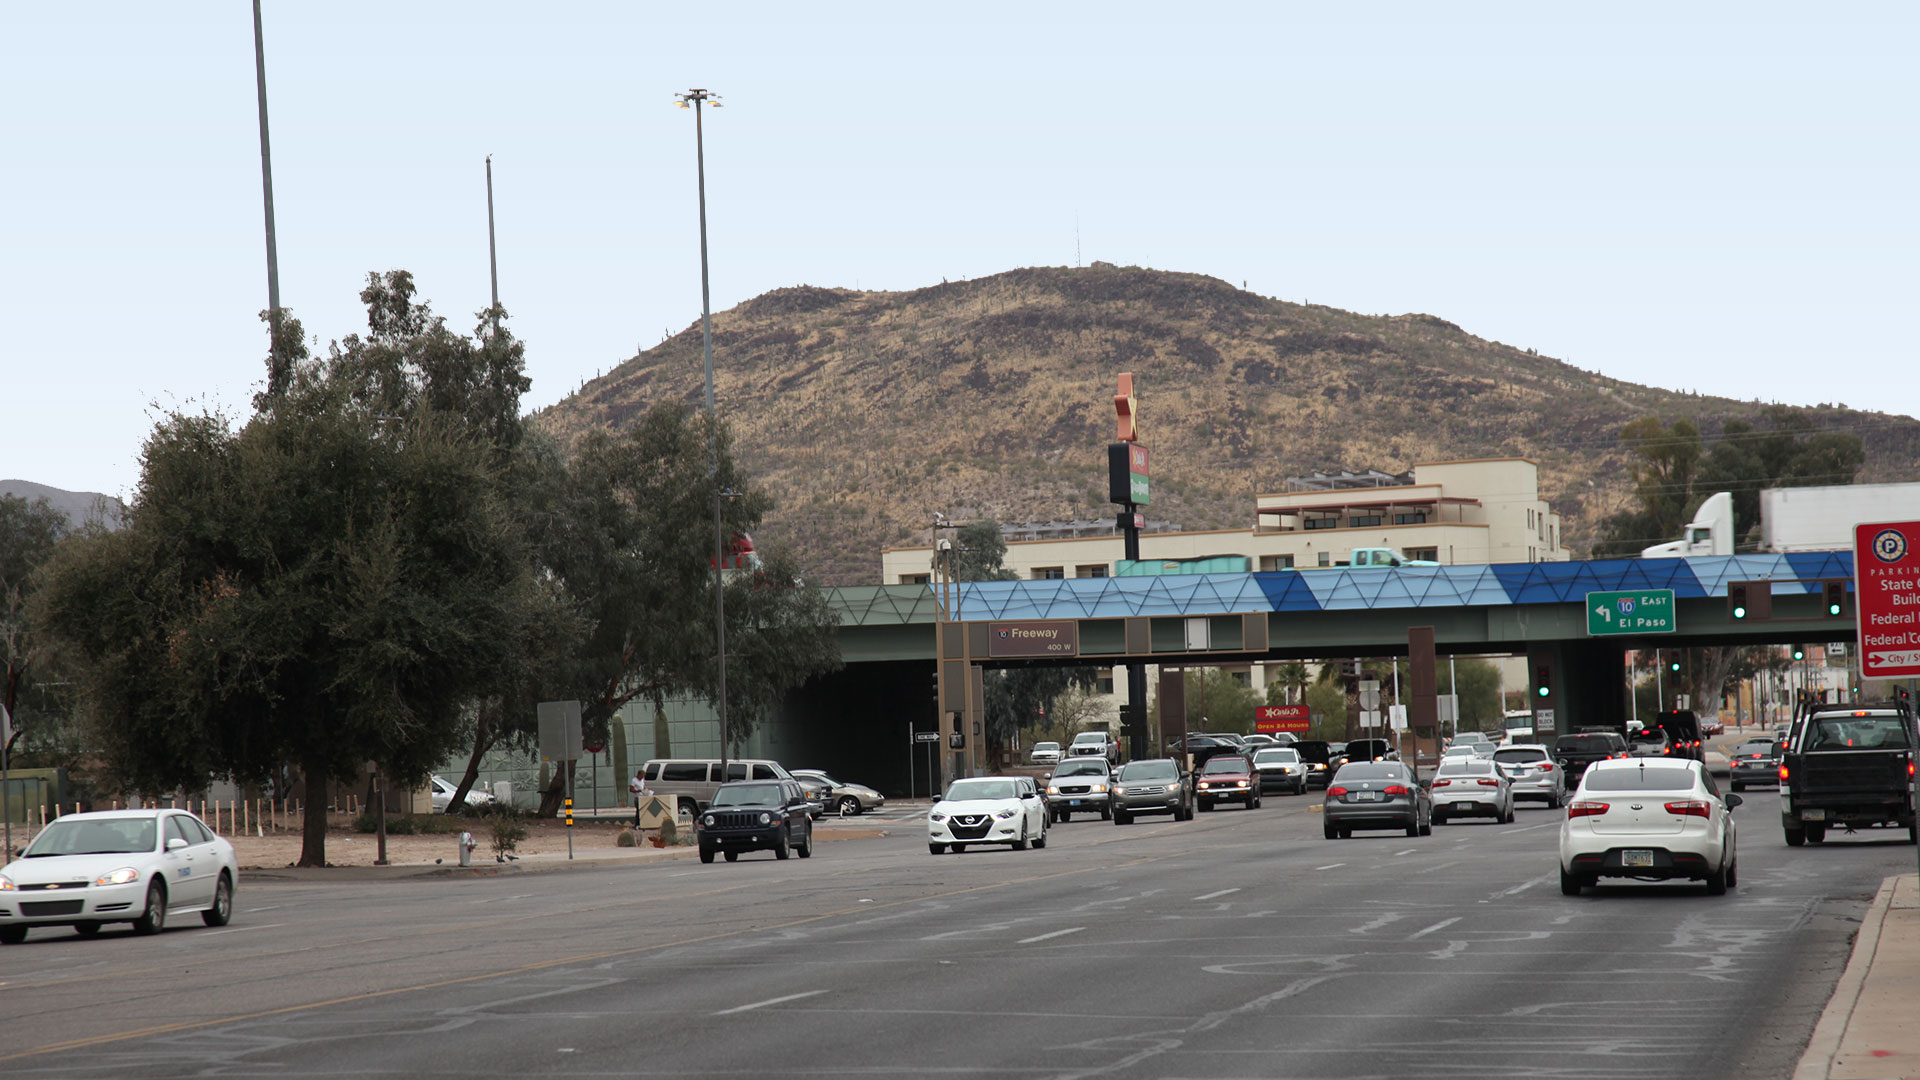 Self-driving car startup that lost permit in California coming to Tucson - Arizona Public Media